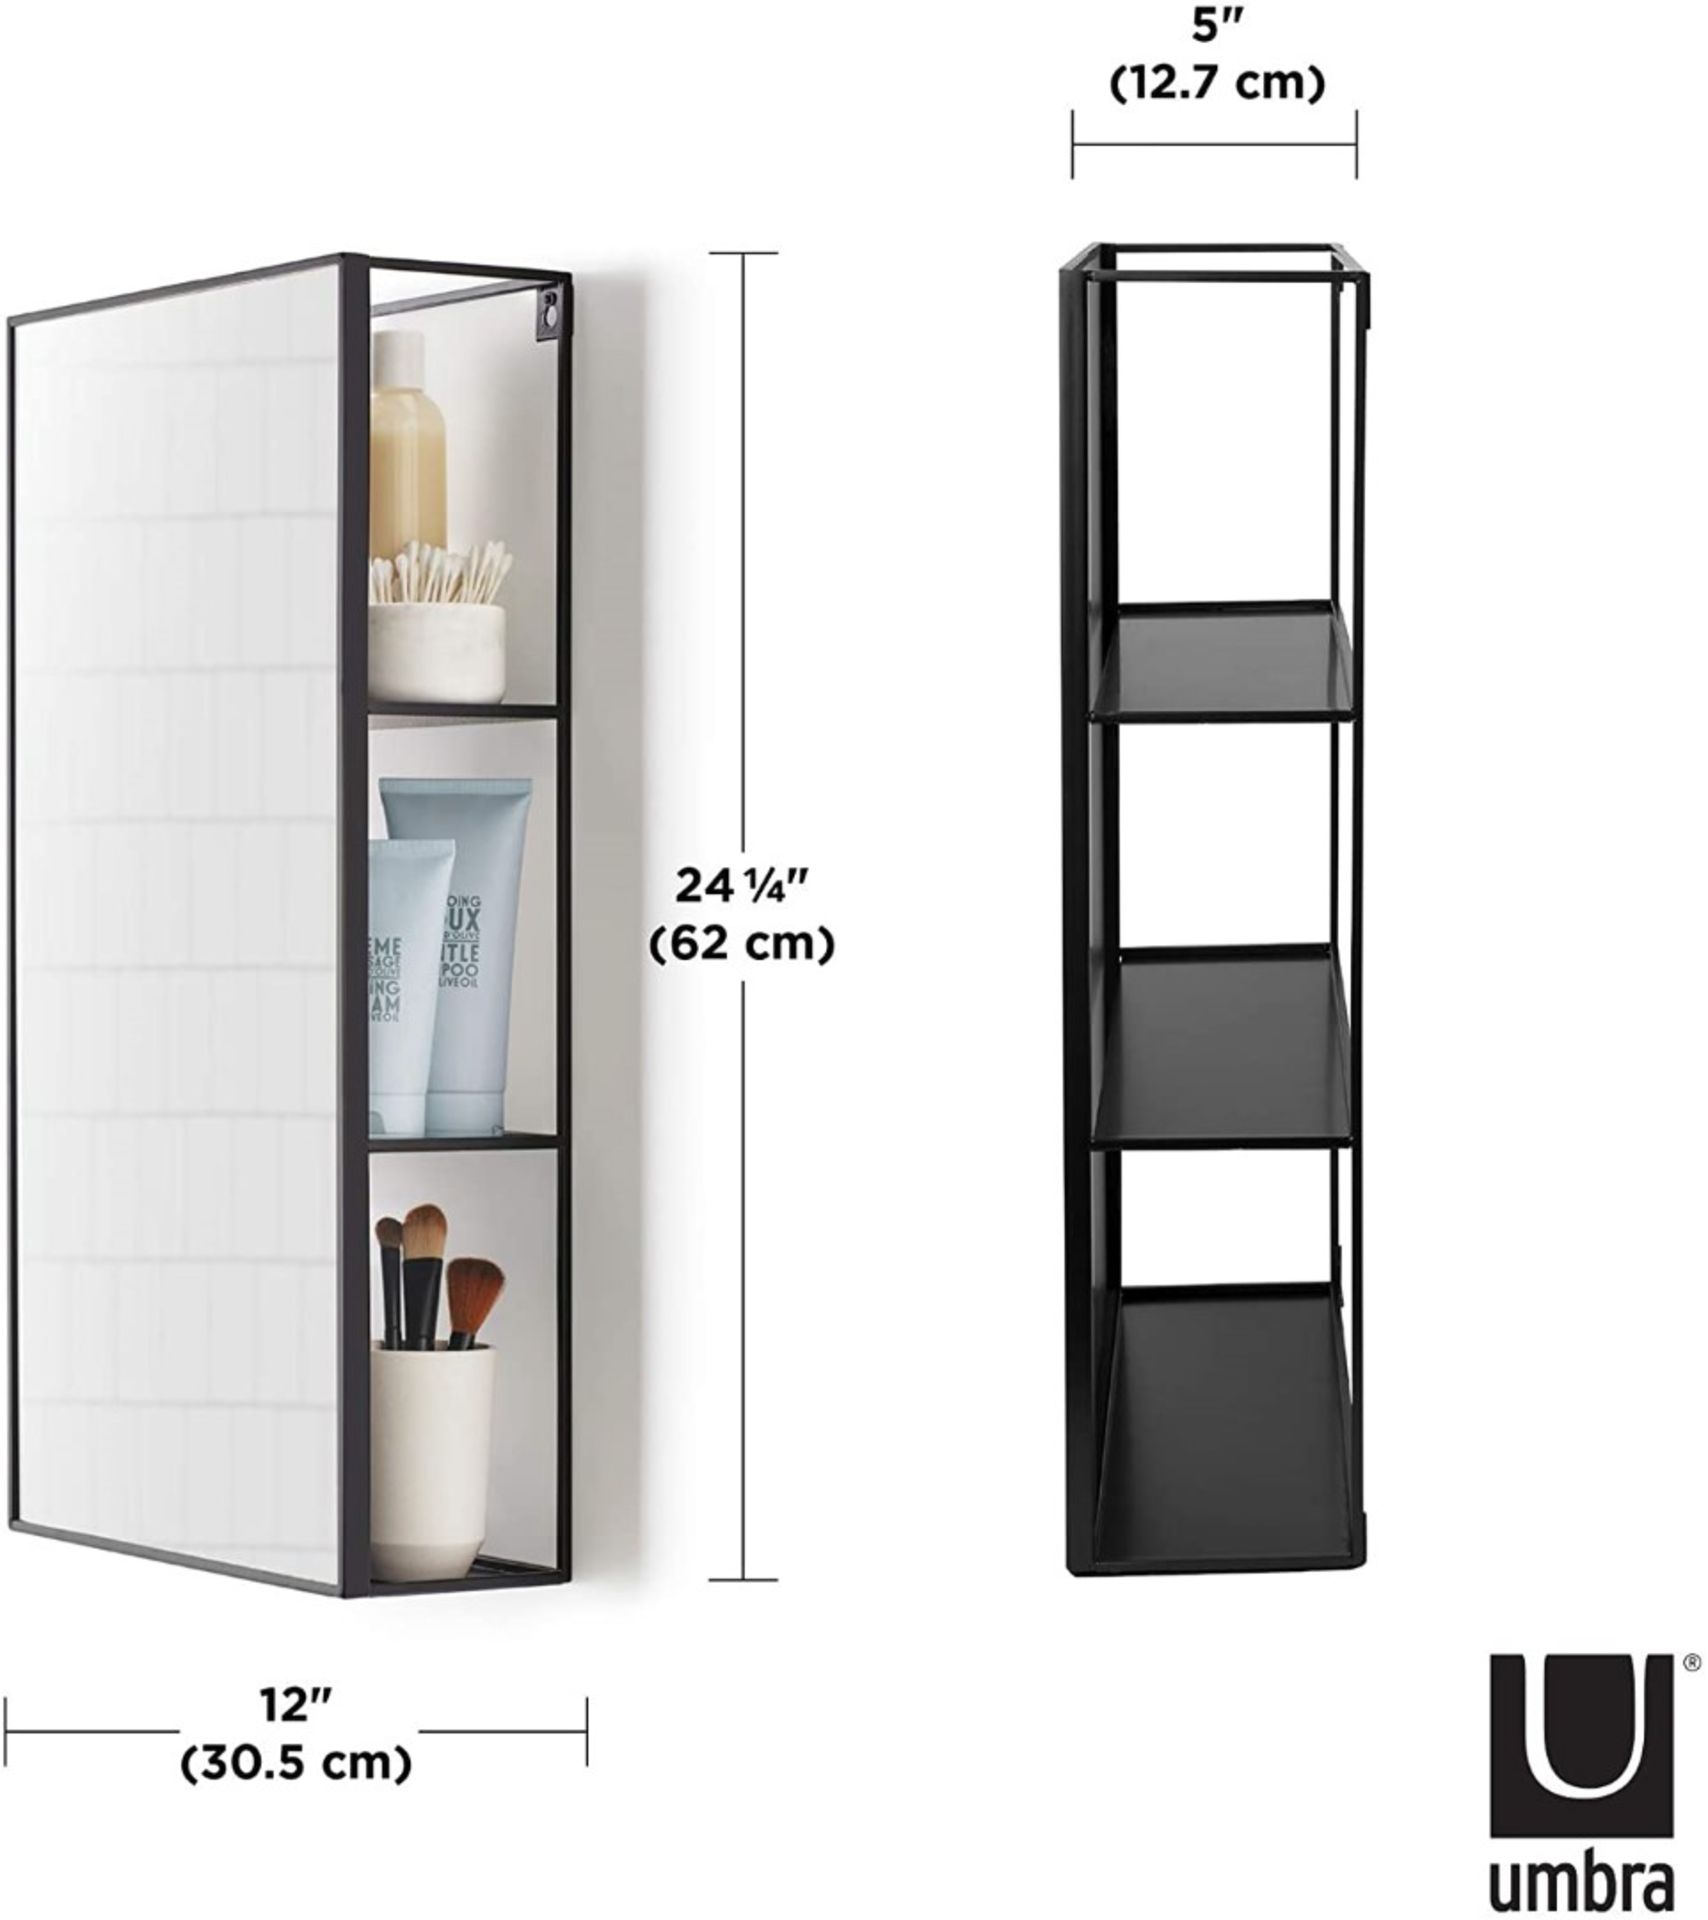 1 x Umbra 'CUBIKO' Sleek Modern Mirrored Medicine Cabinet With A Black Metal Frame - Dimensions: - Image 4 of 8